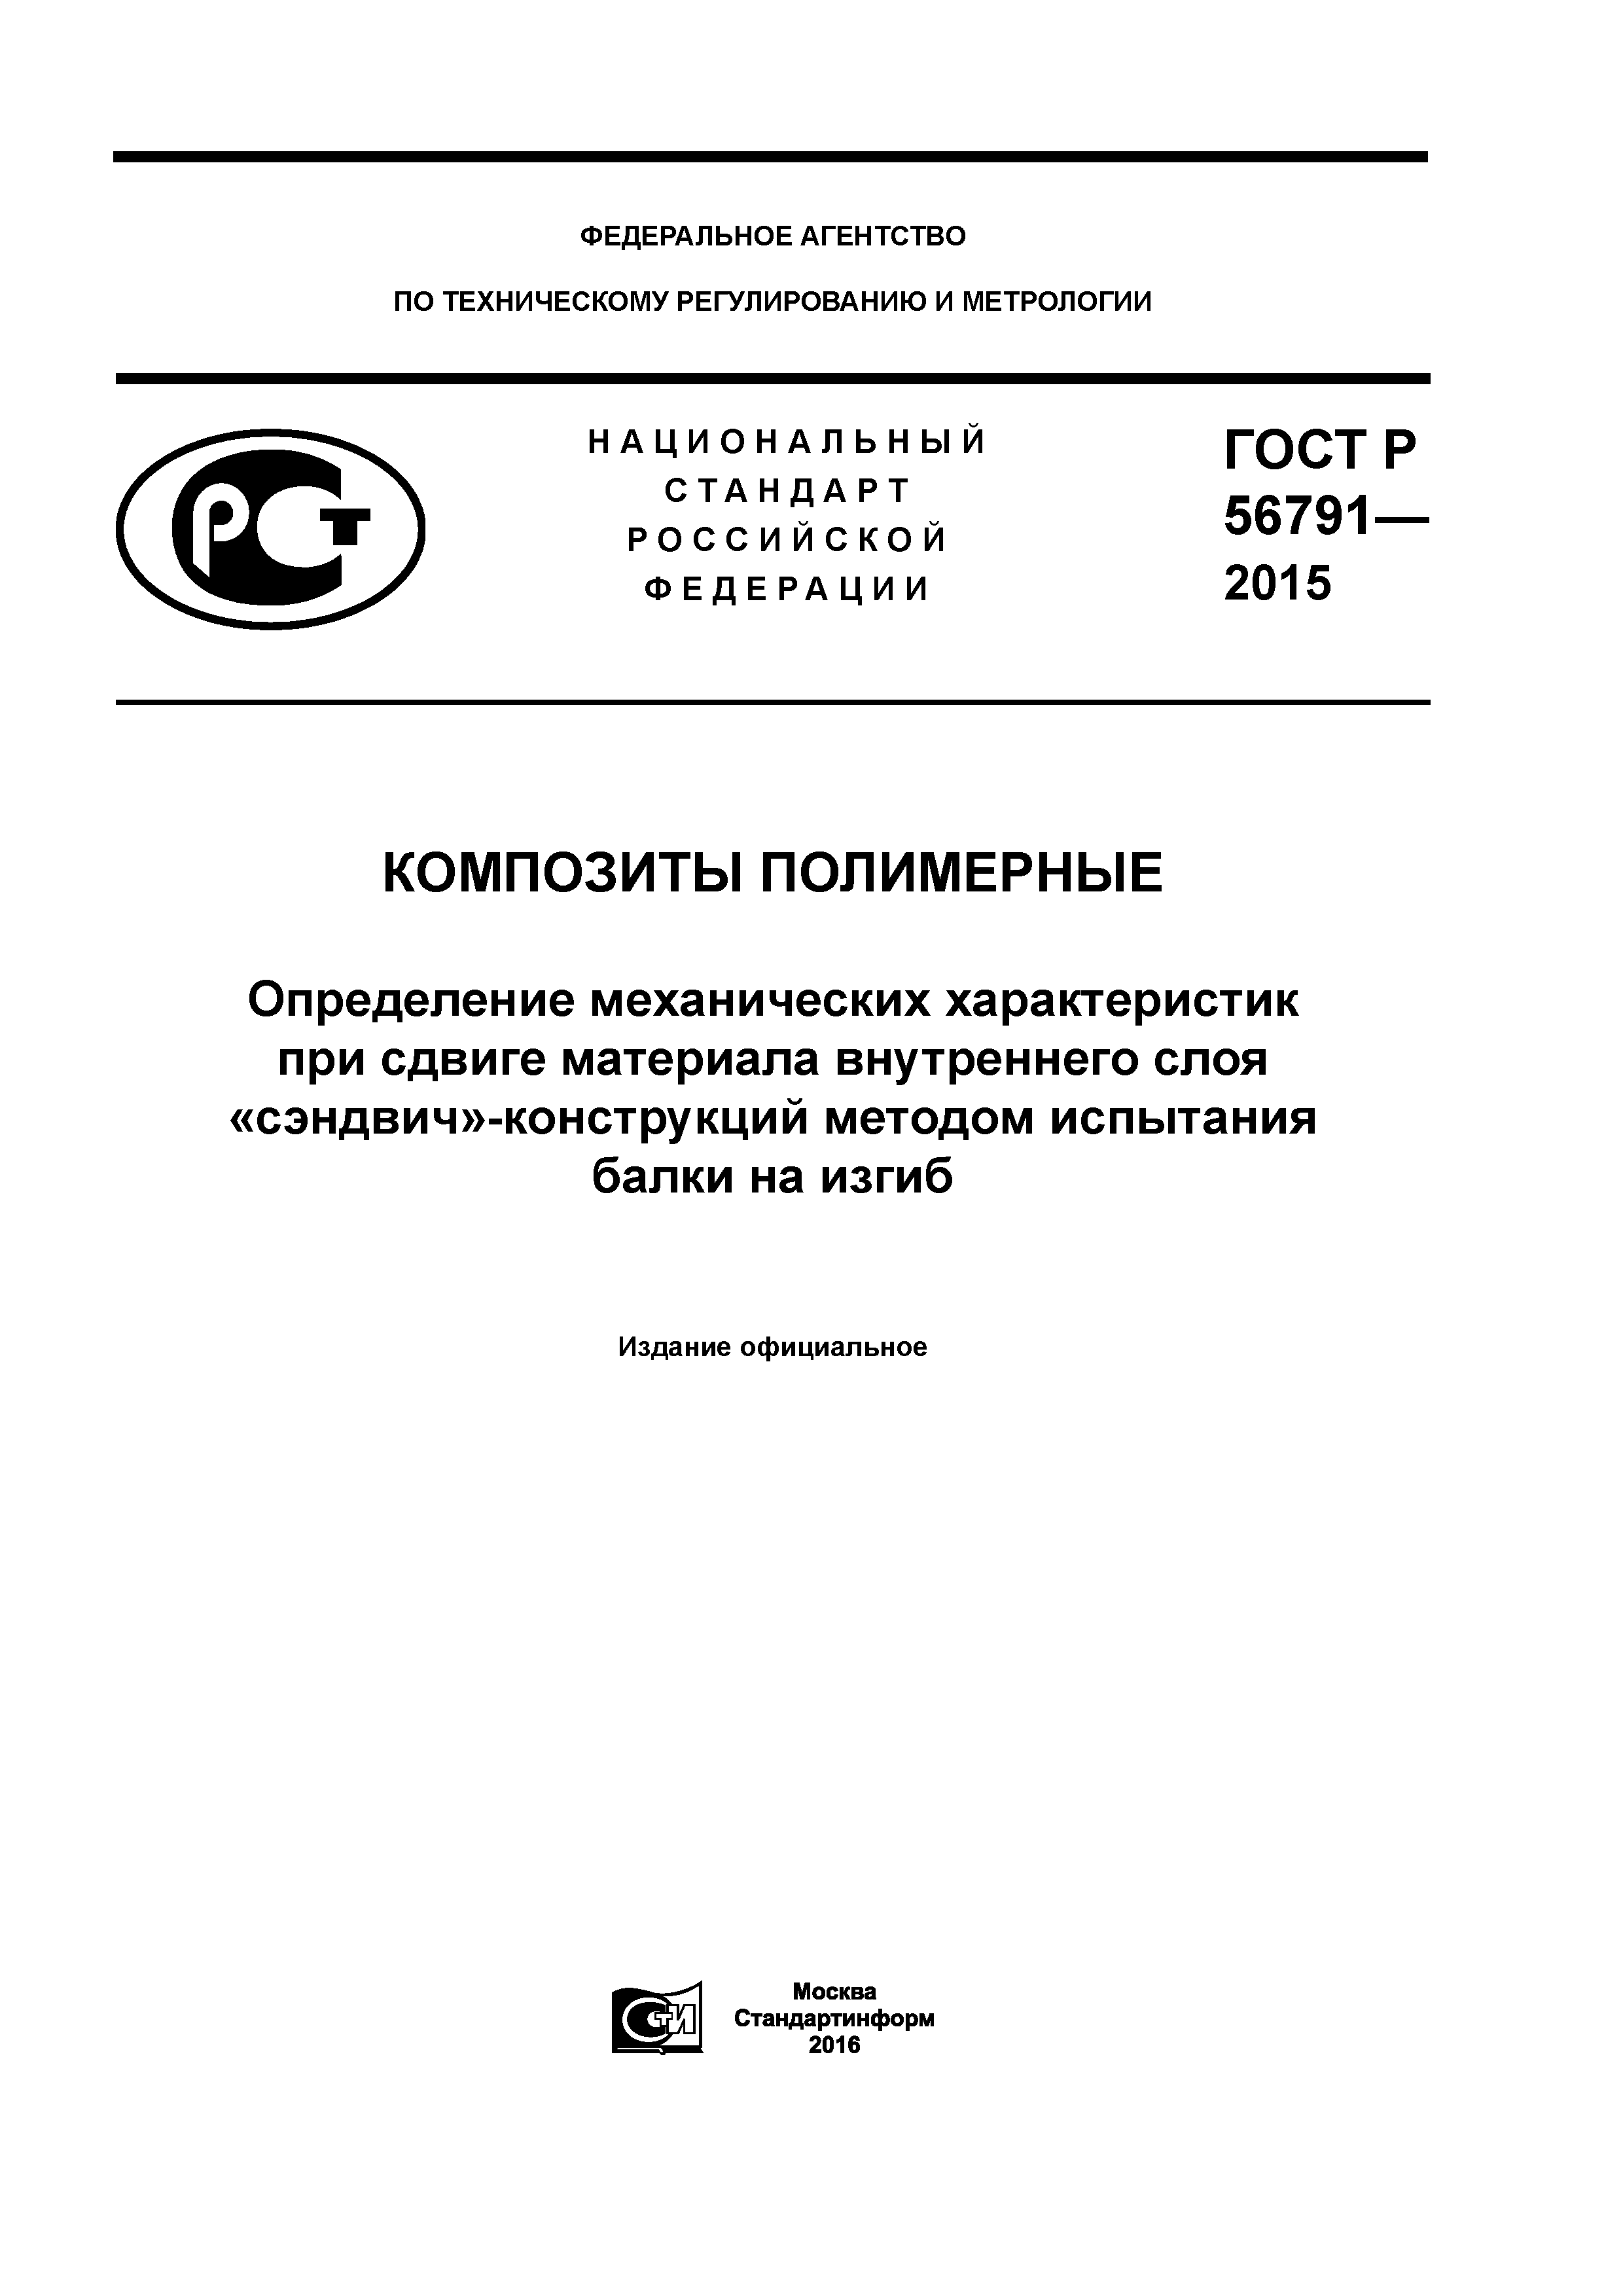 ГОСТ Р 56791-2015